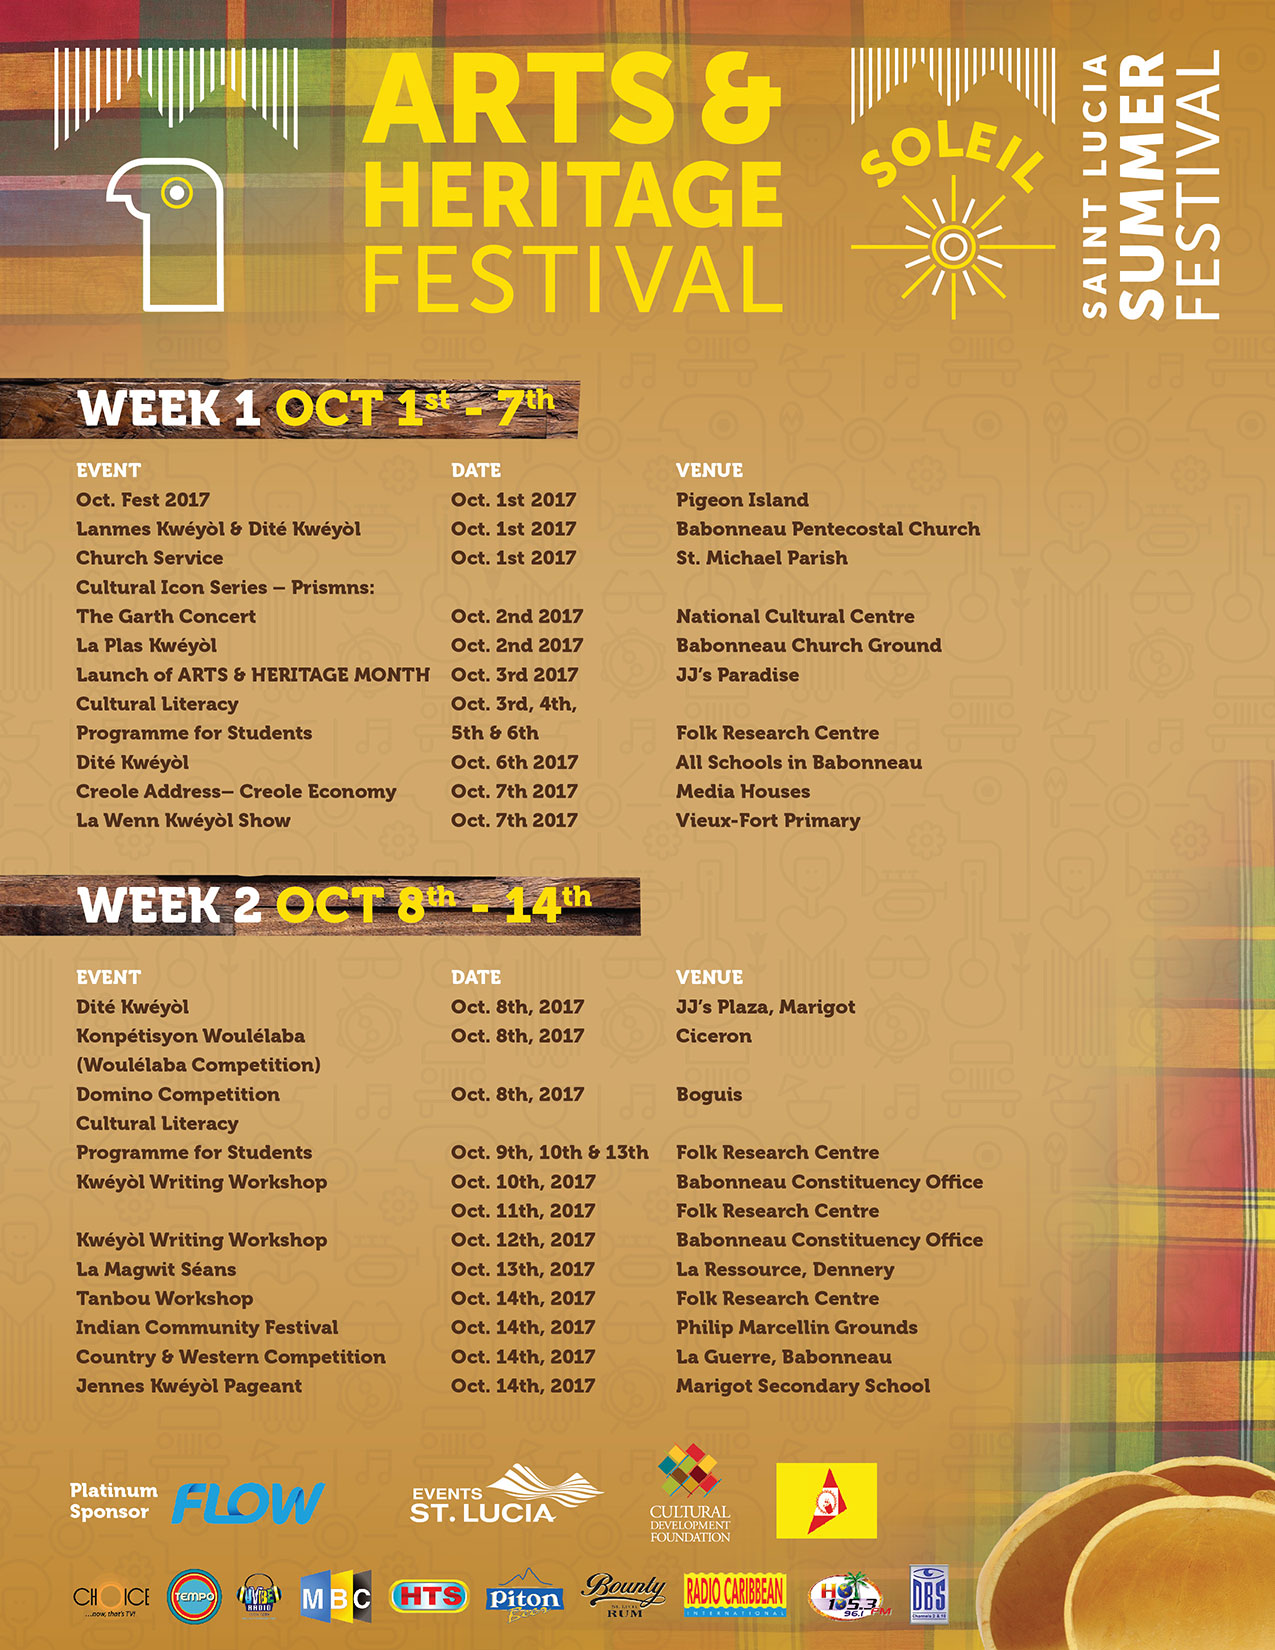 SOLEIL Arts & Heritage Festival Schedule Caribbean Press Release